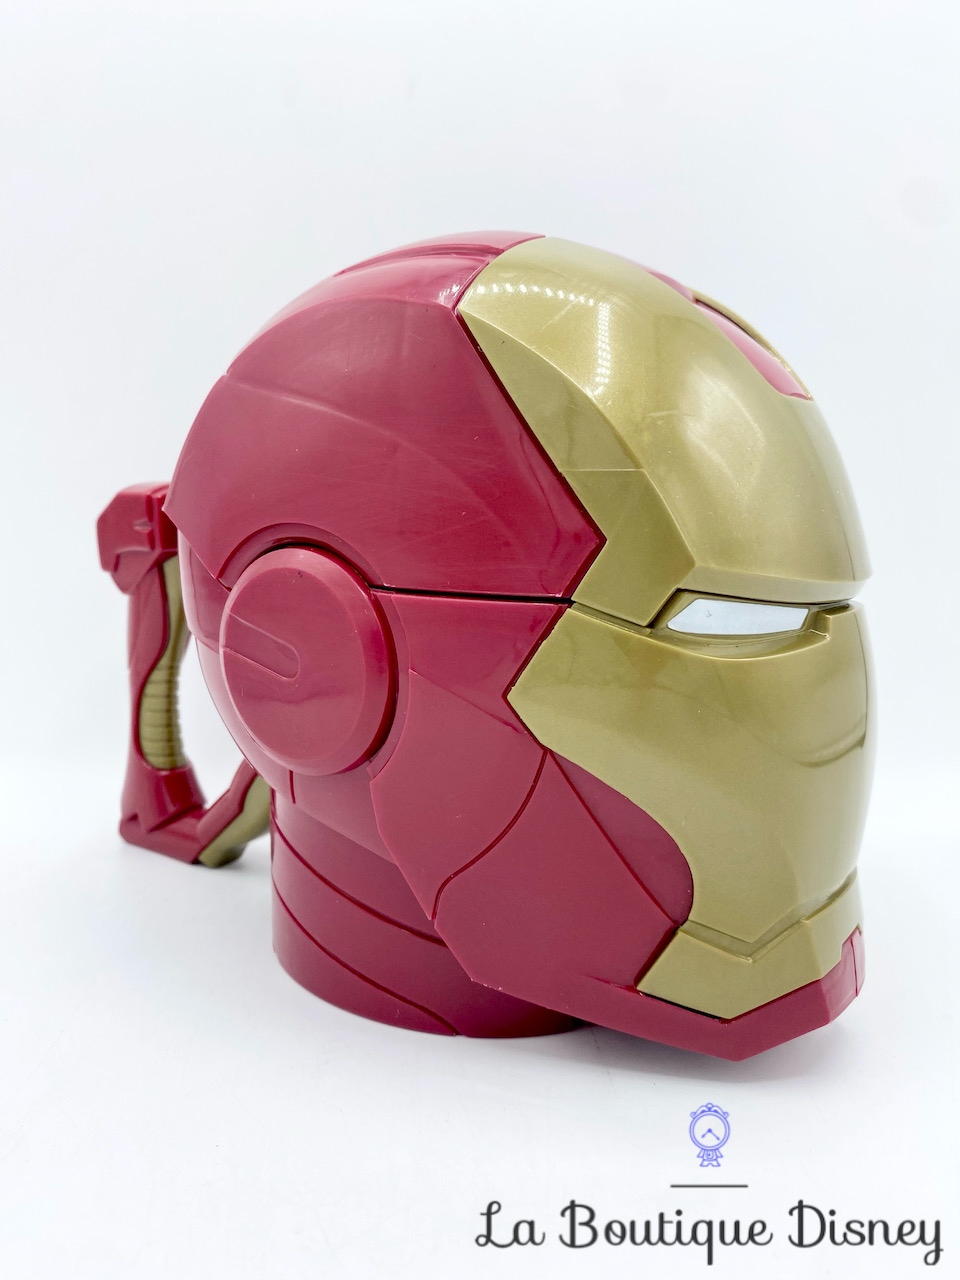 Tasse plastique Iron Man Marvel Disney Parks mug Disneyland casque masque seau pop corn